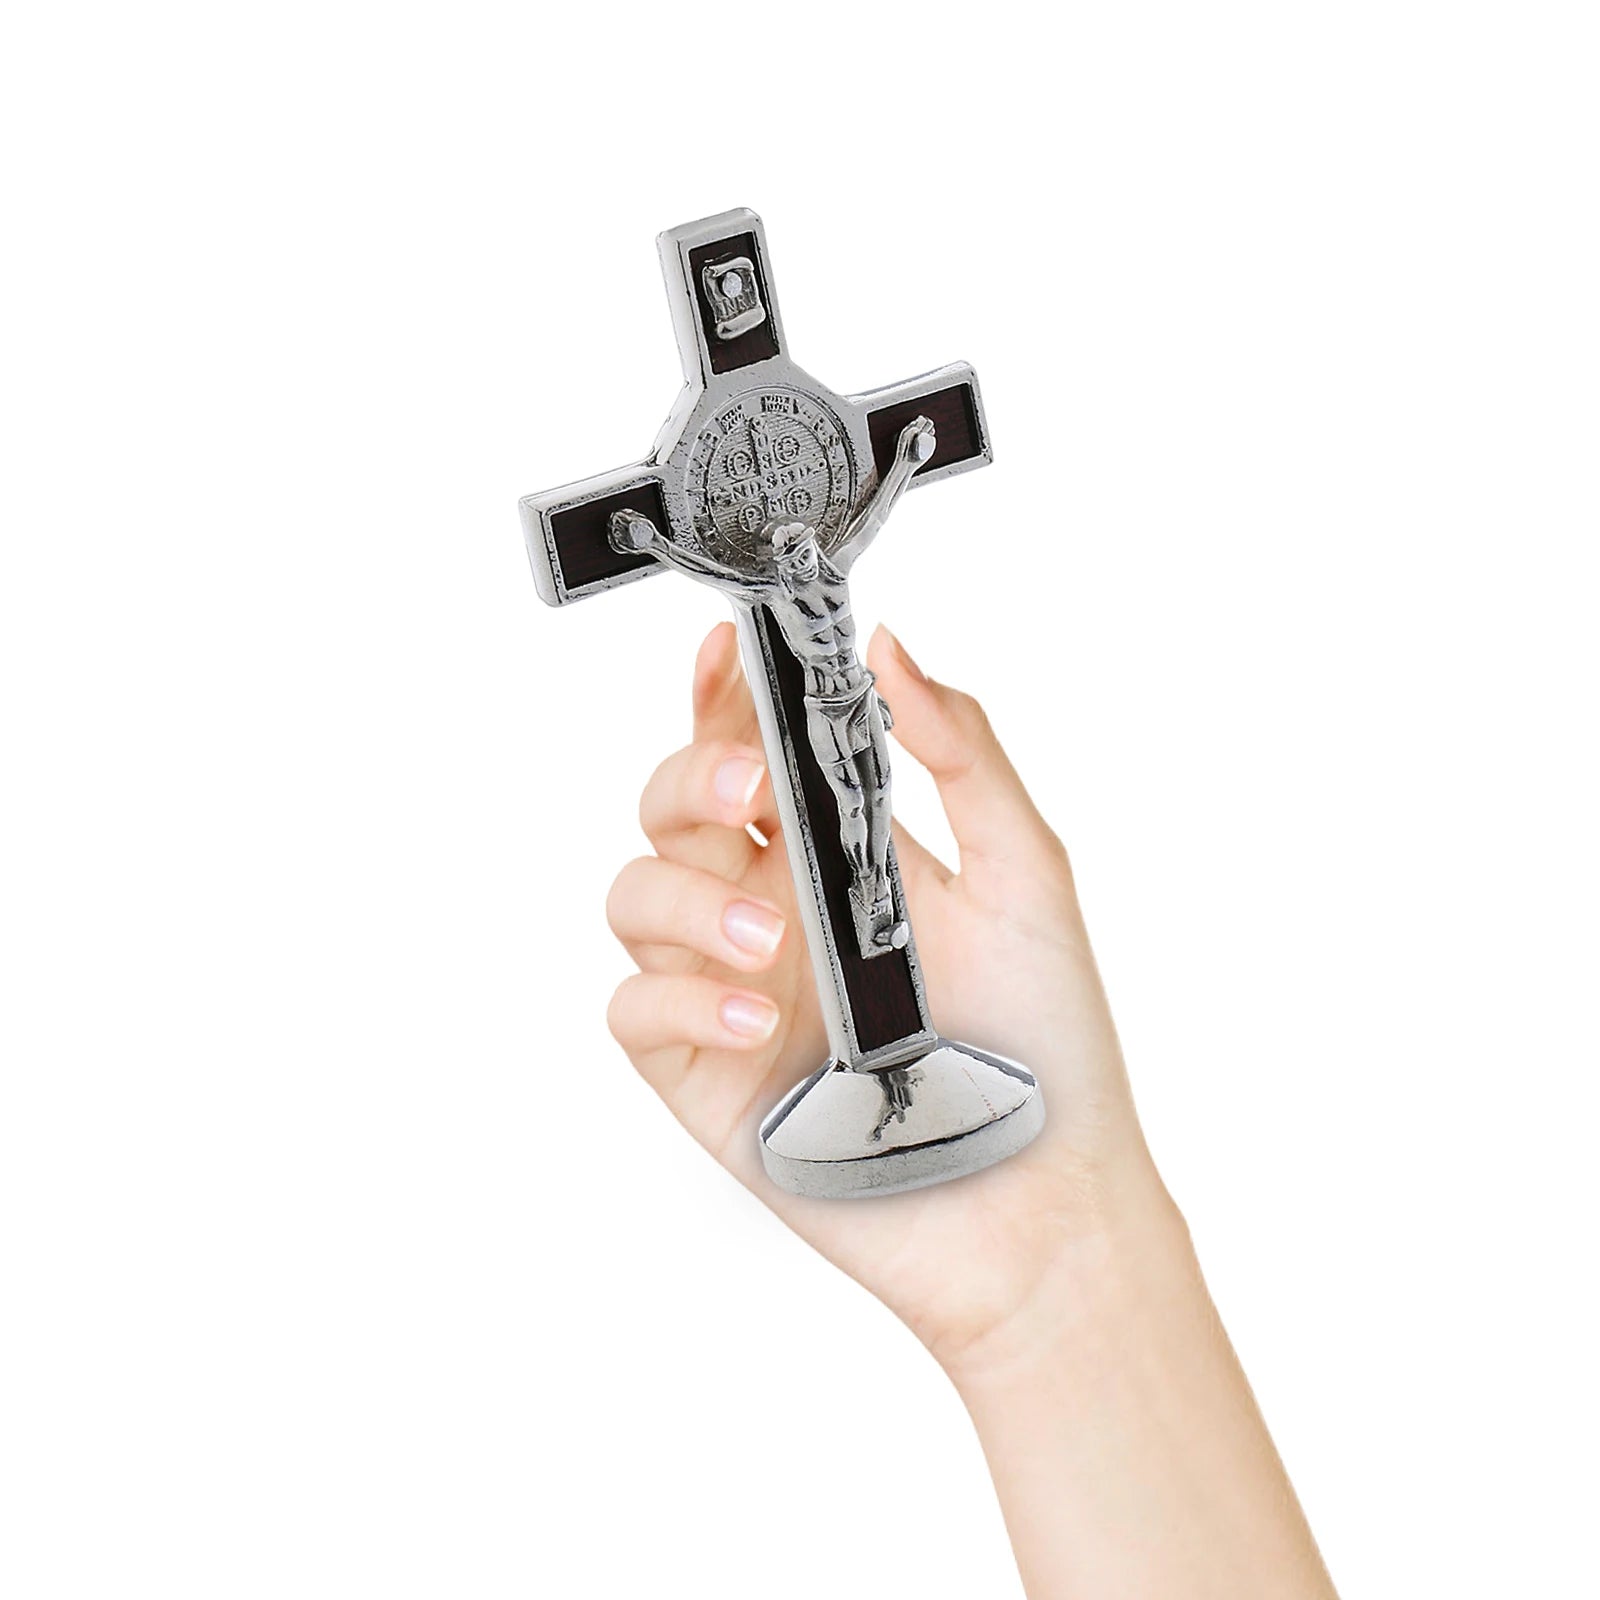 Jesus Crucifix Cross Statue